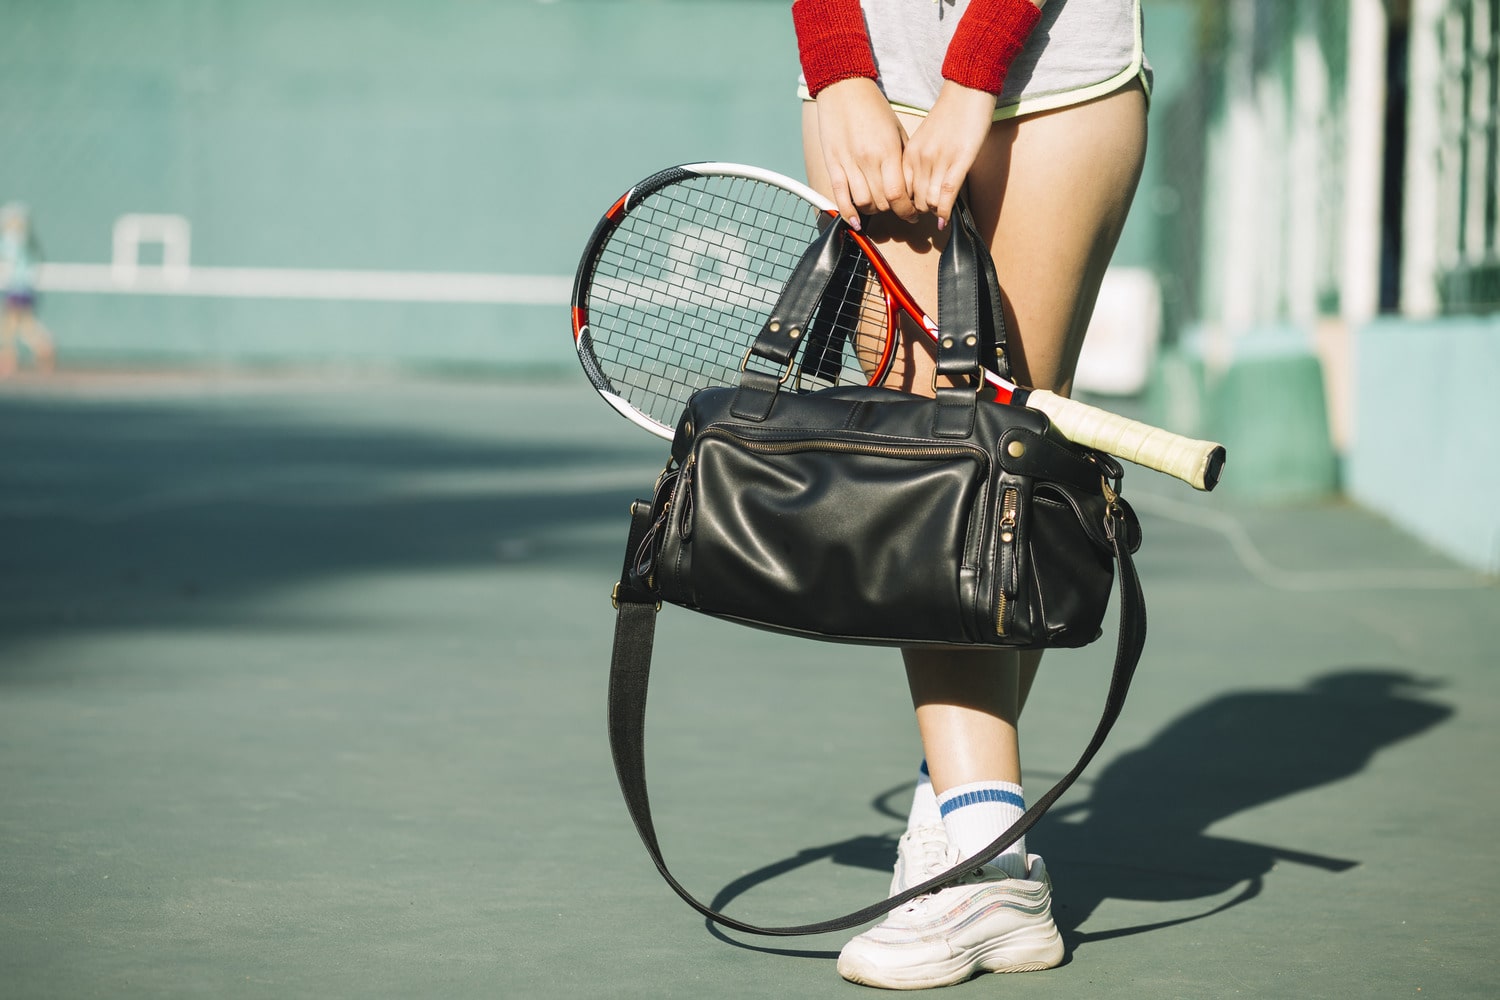 Tennis Bags For Women